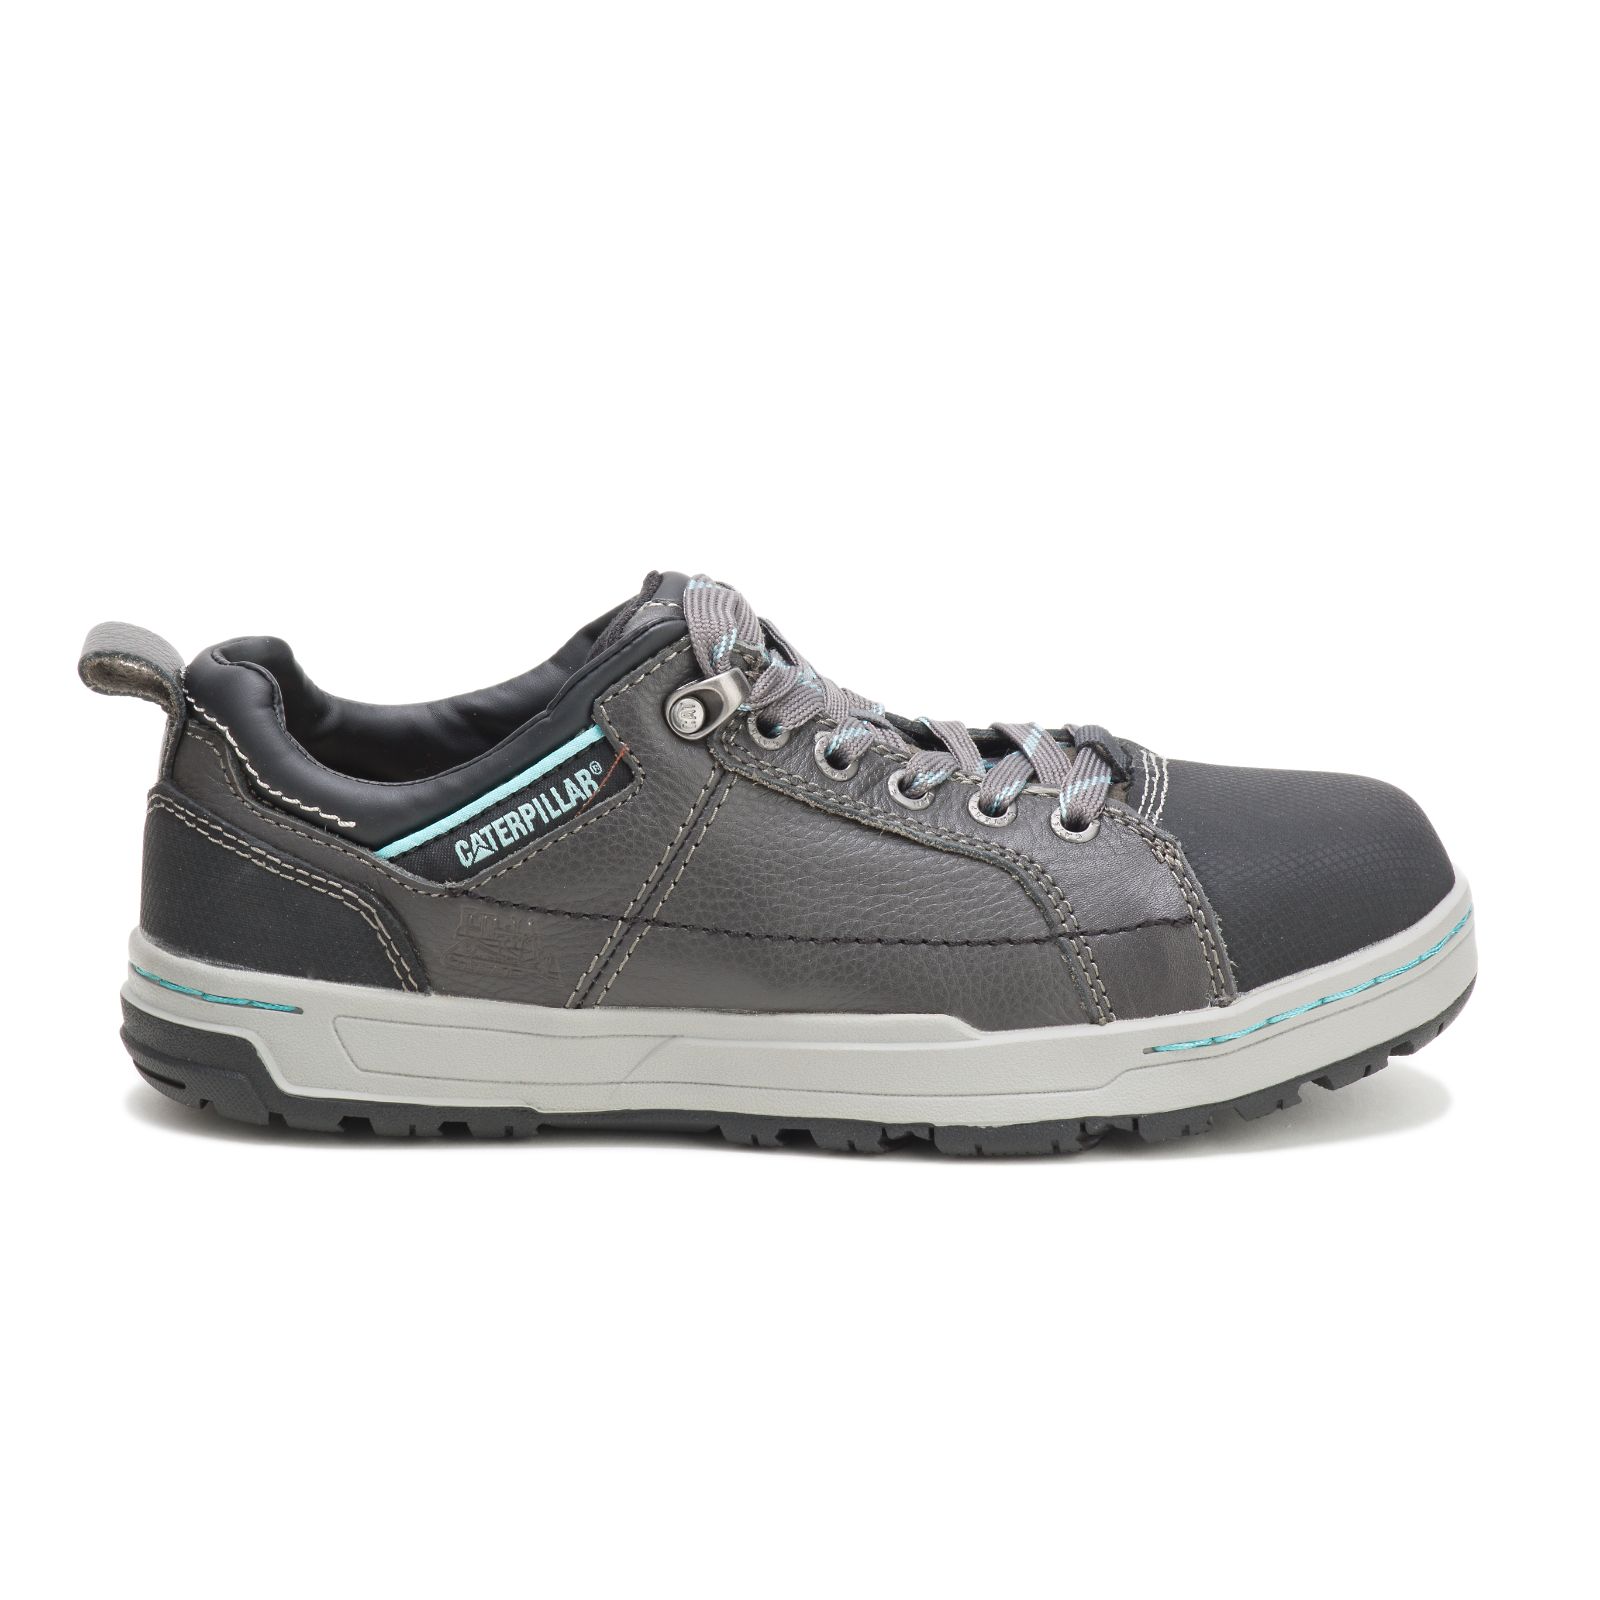 Caterpillar Steel Toe Boots UAE - Caterpillar Brode Steel Toe Womens - Dark Grey/Mint PIAXQN325